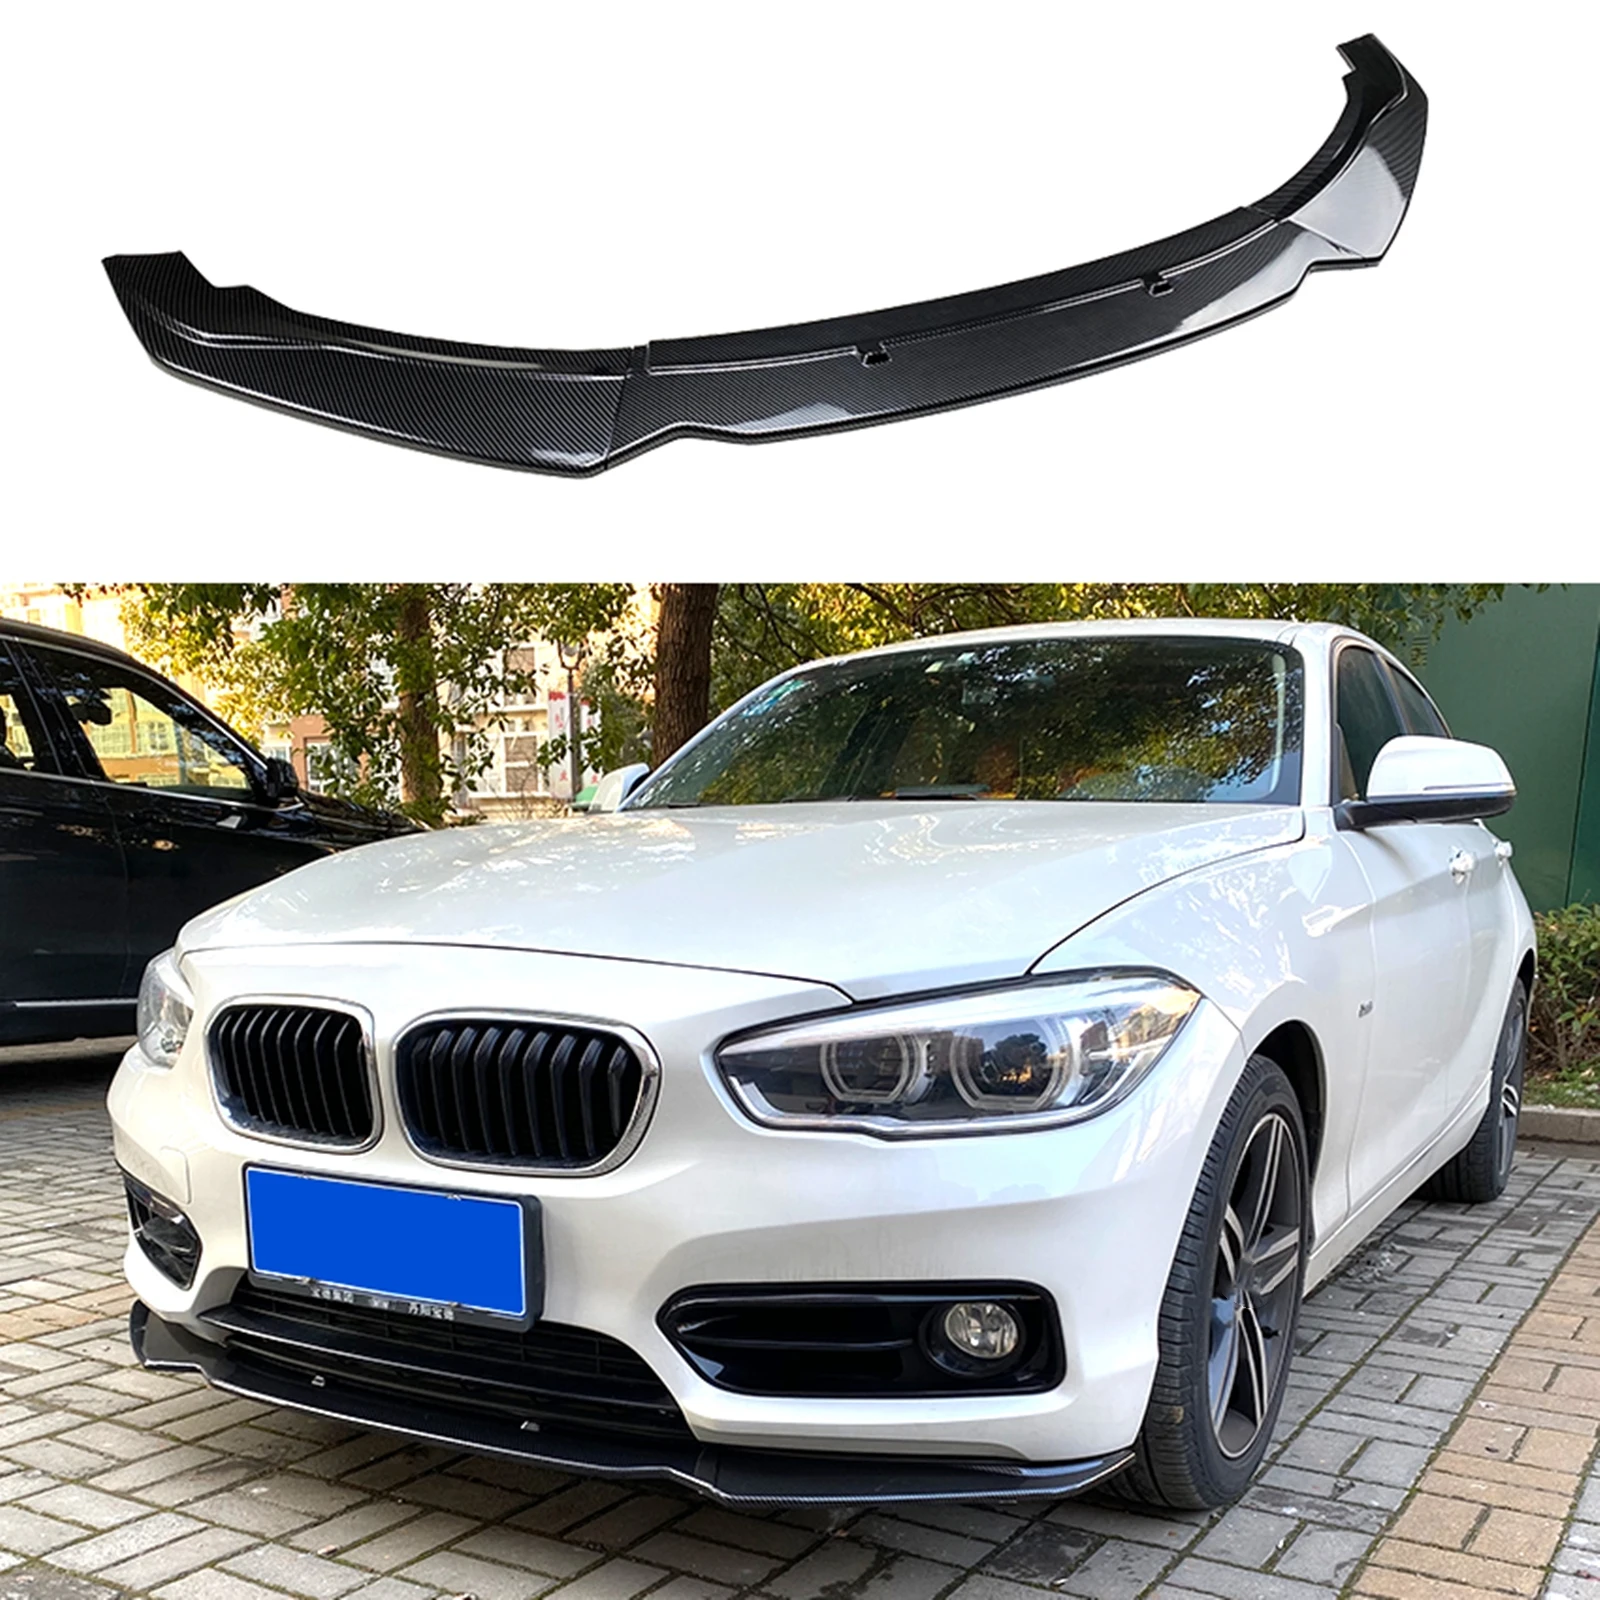 

For BMW 1 Series F20 F21 116i 118i 120i 2015-2019 Carbon Fiber Look Car Front Spoiler Splitter Lip Kit Regular Bumper Model Only